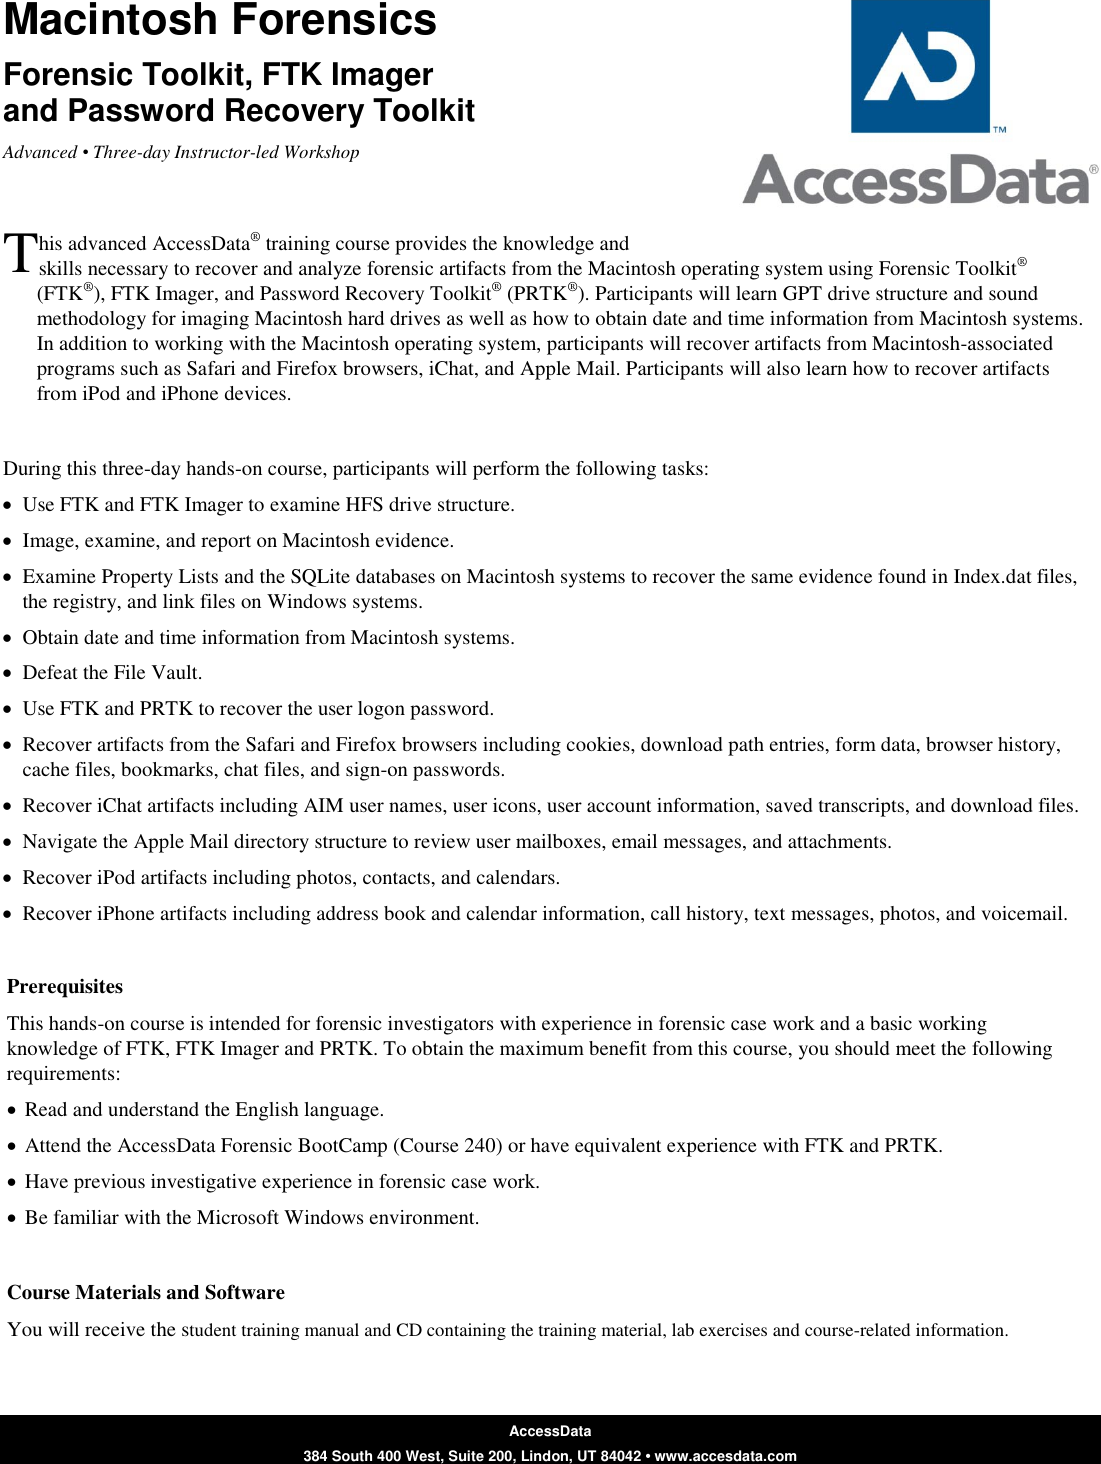 Page 1 of 3 - AccessData Forensic BootCamp  Macintosh Forensics Syllabus